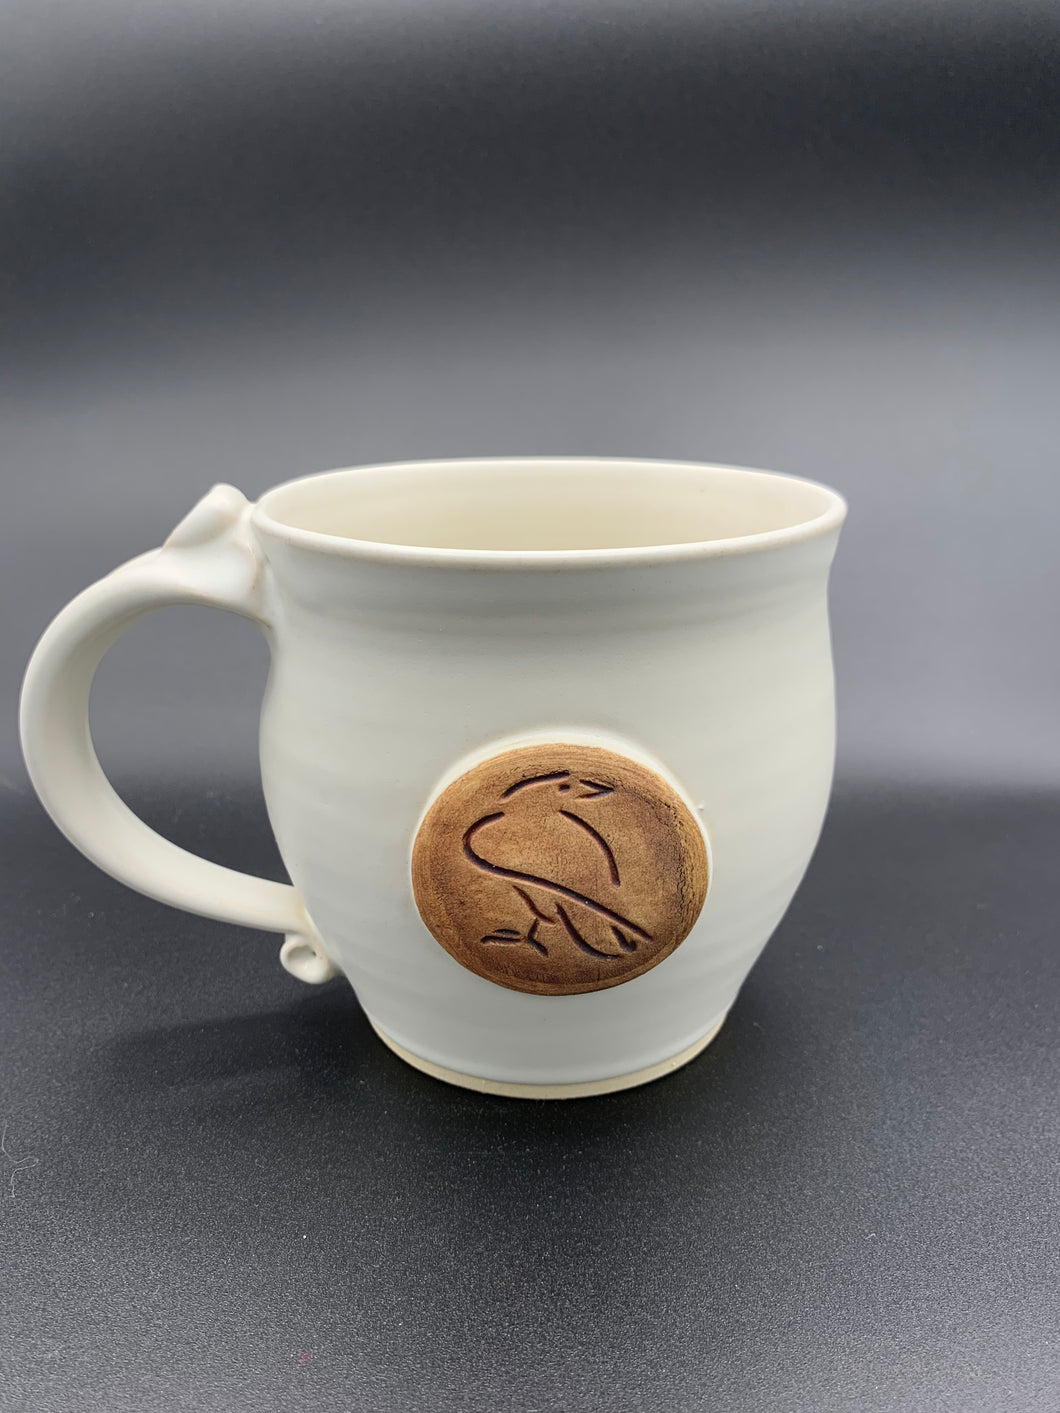 Latte/soup mug - the crows know.